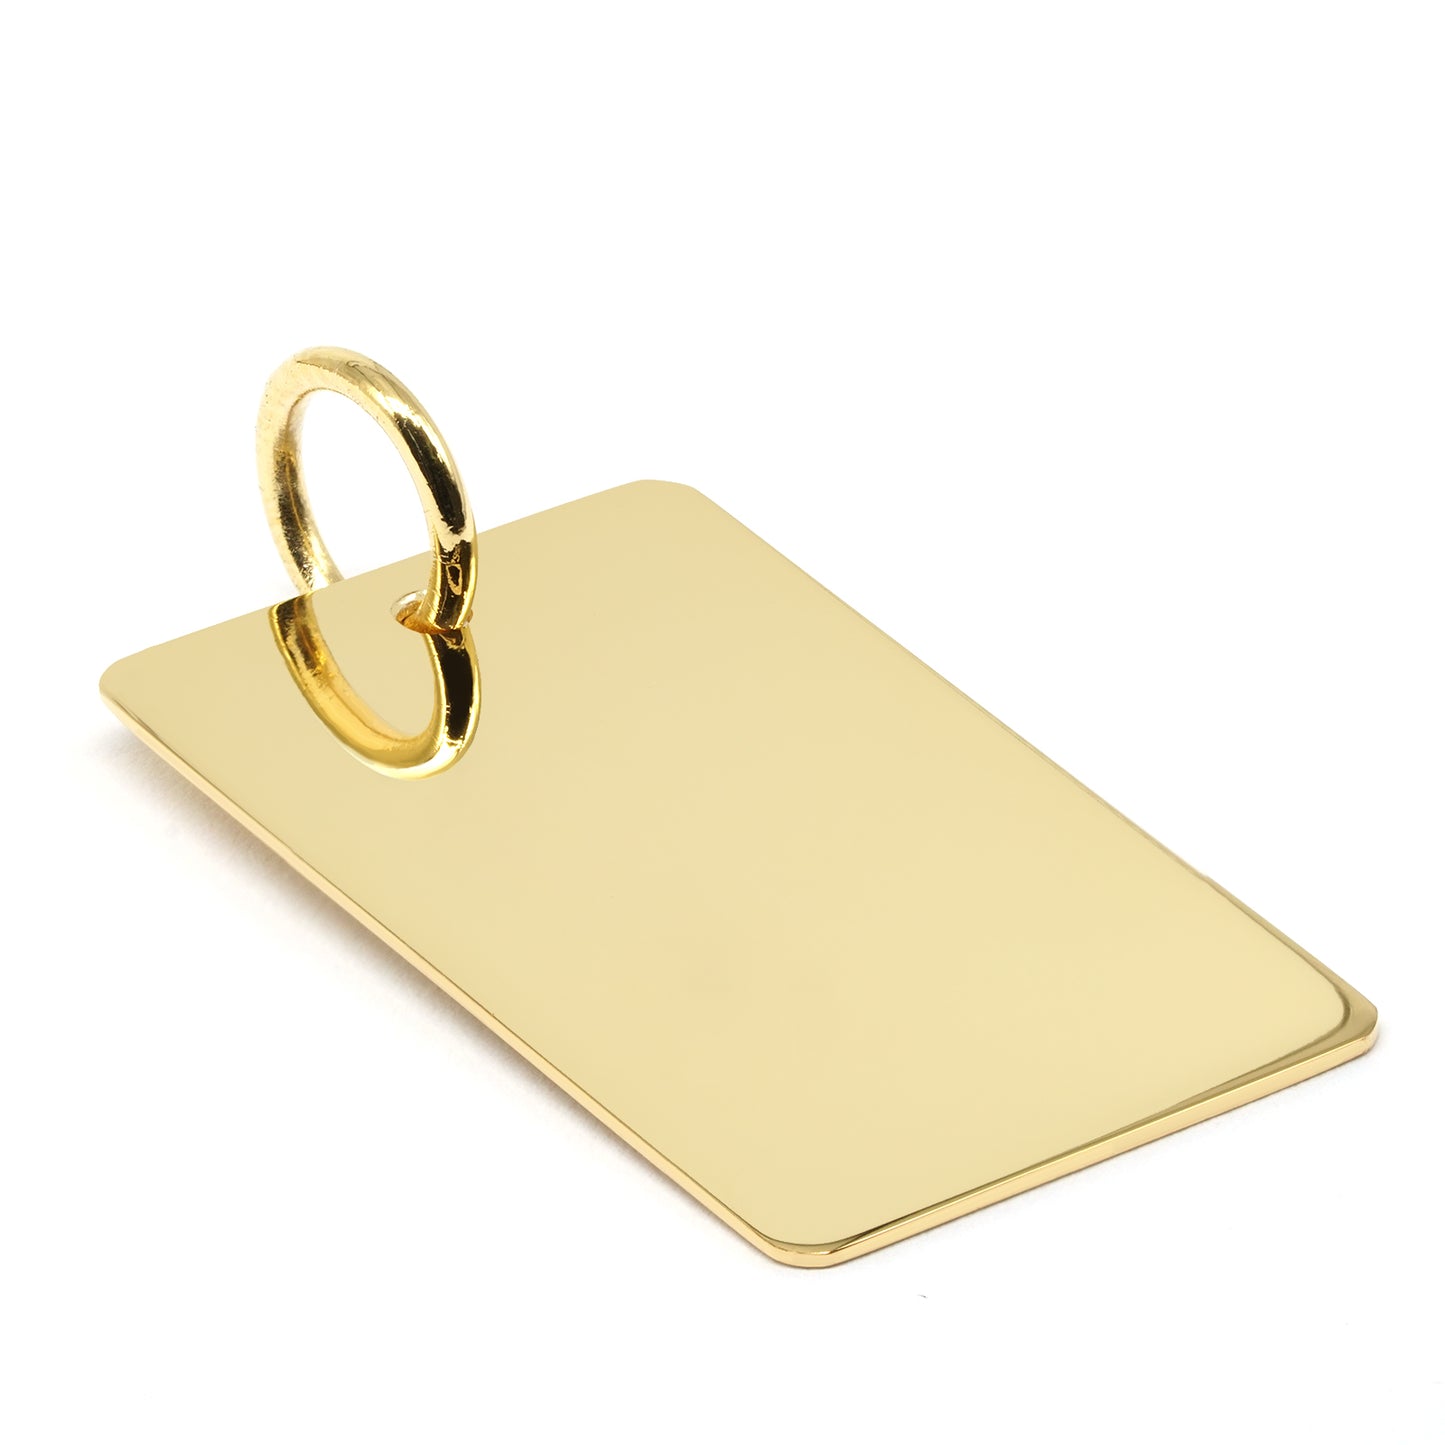 Custom Engravable Dog Tag Pendant in 14K Gold | High Polish